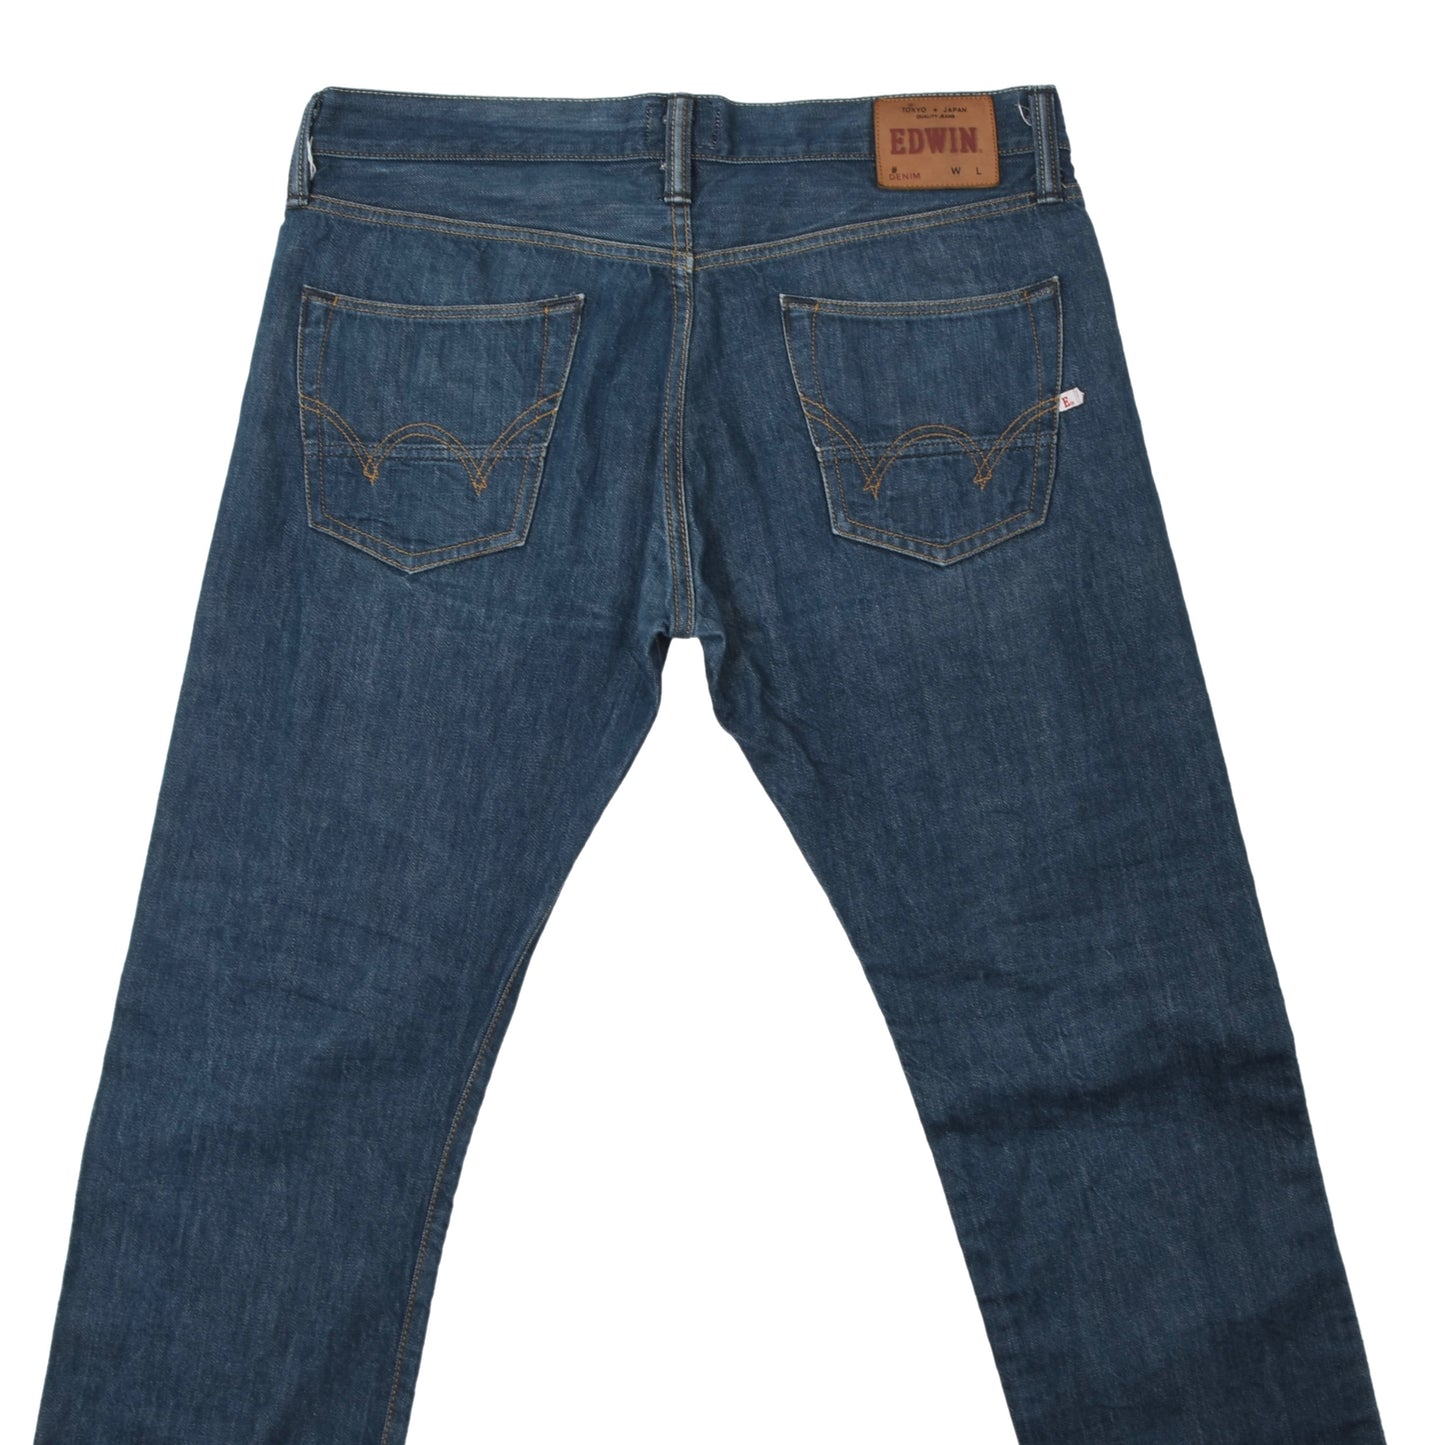 Edwin Tokyo ED-67 Selvedge Jeans Size 33x34